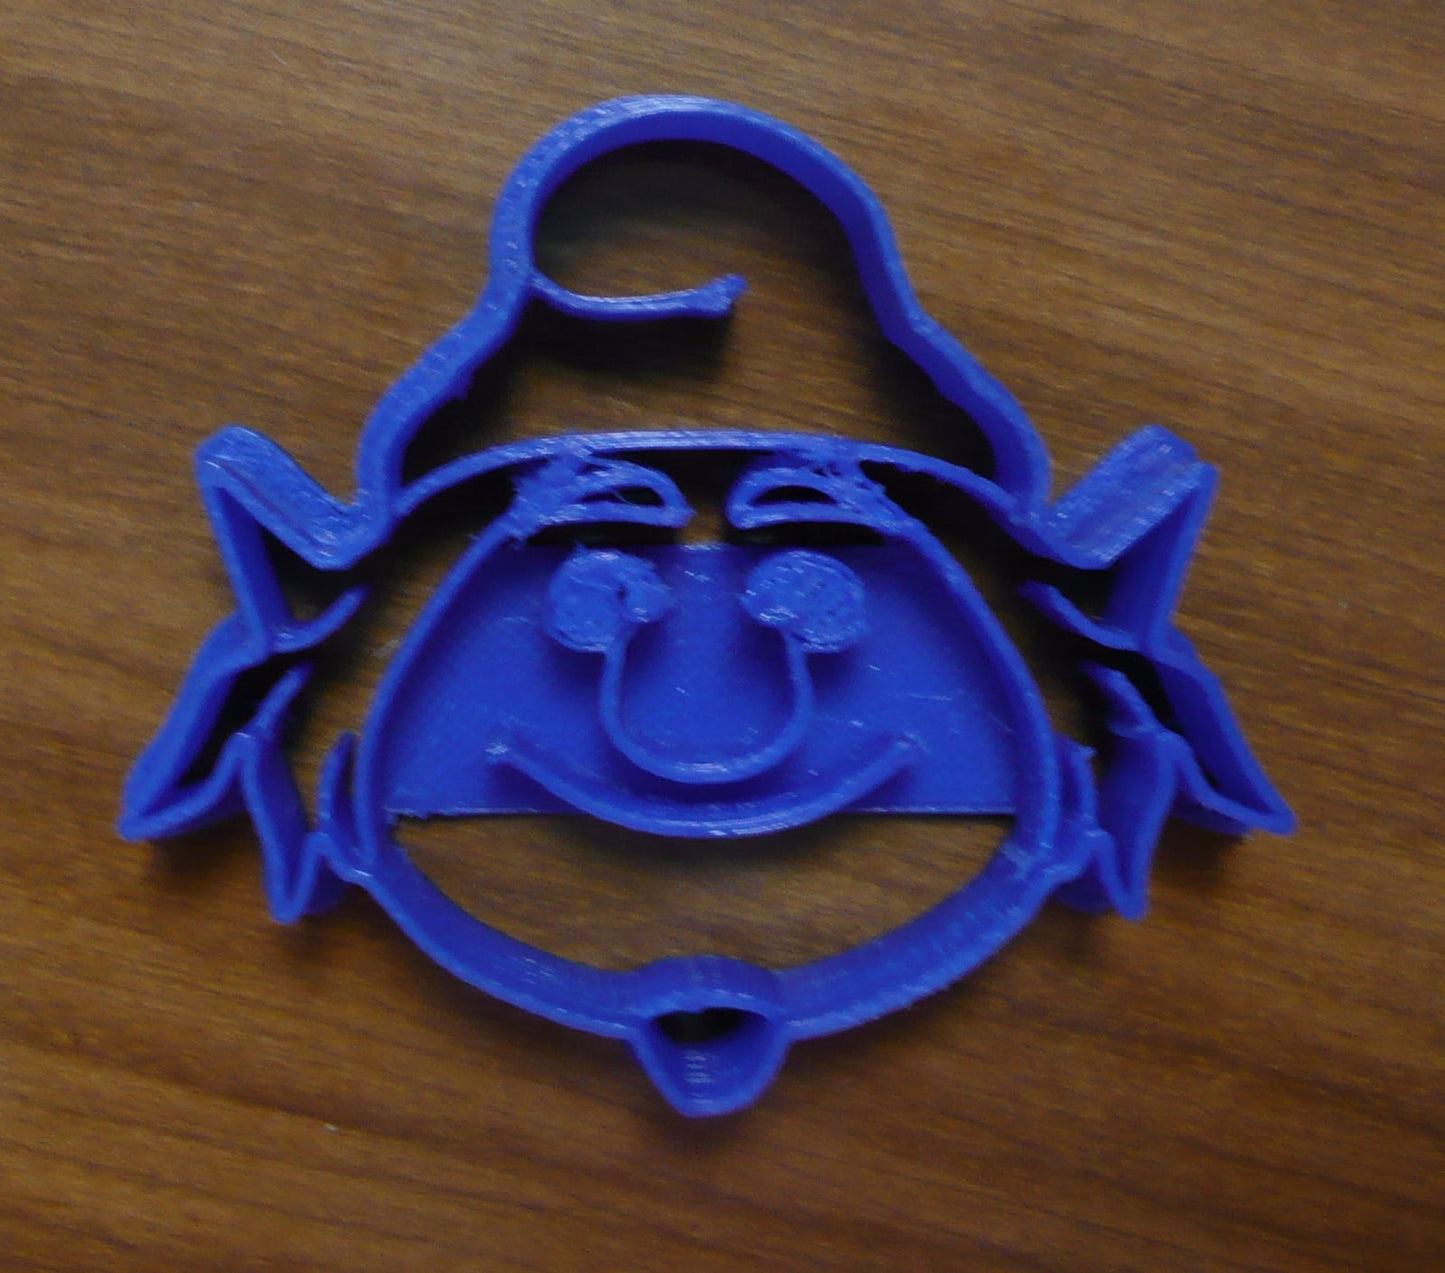 Smurf Face The Smurfs Cartoon Movie Hackus Cookie Cutter Made in USA PR498